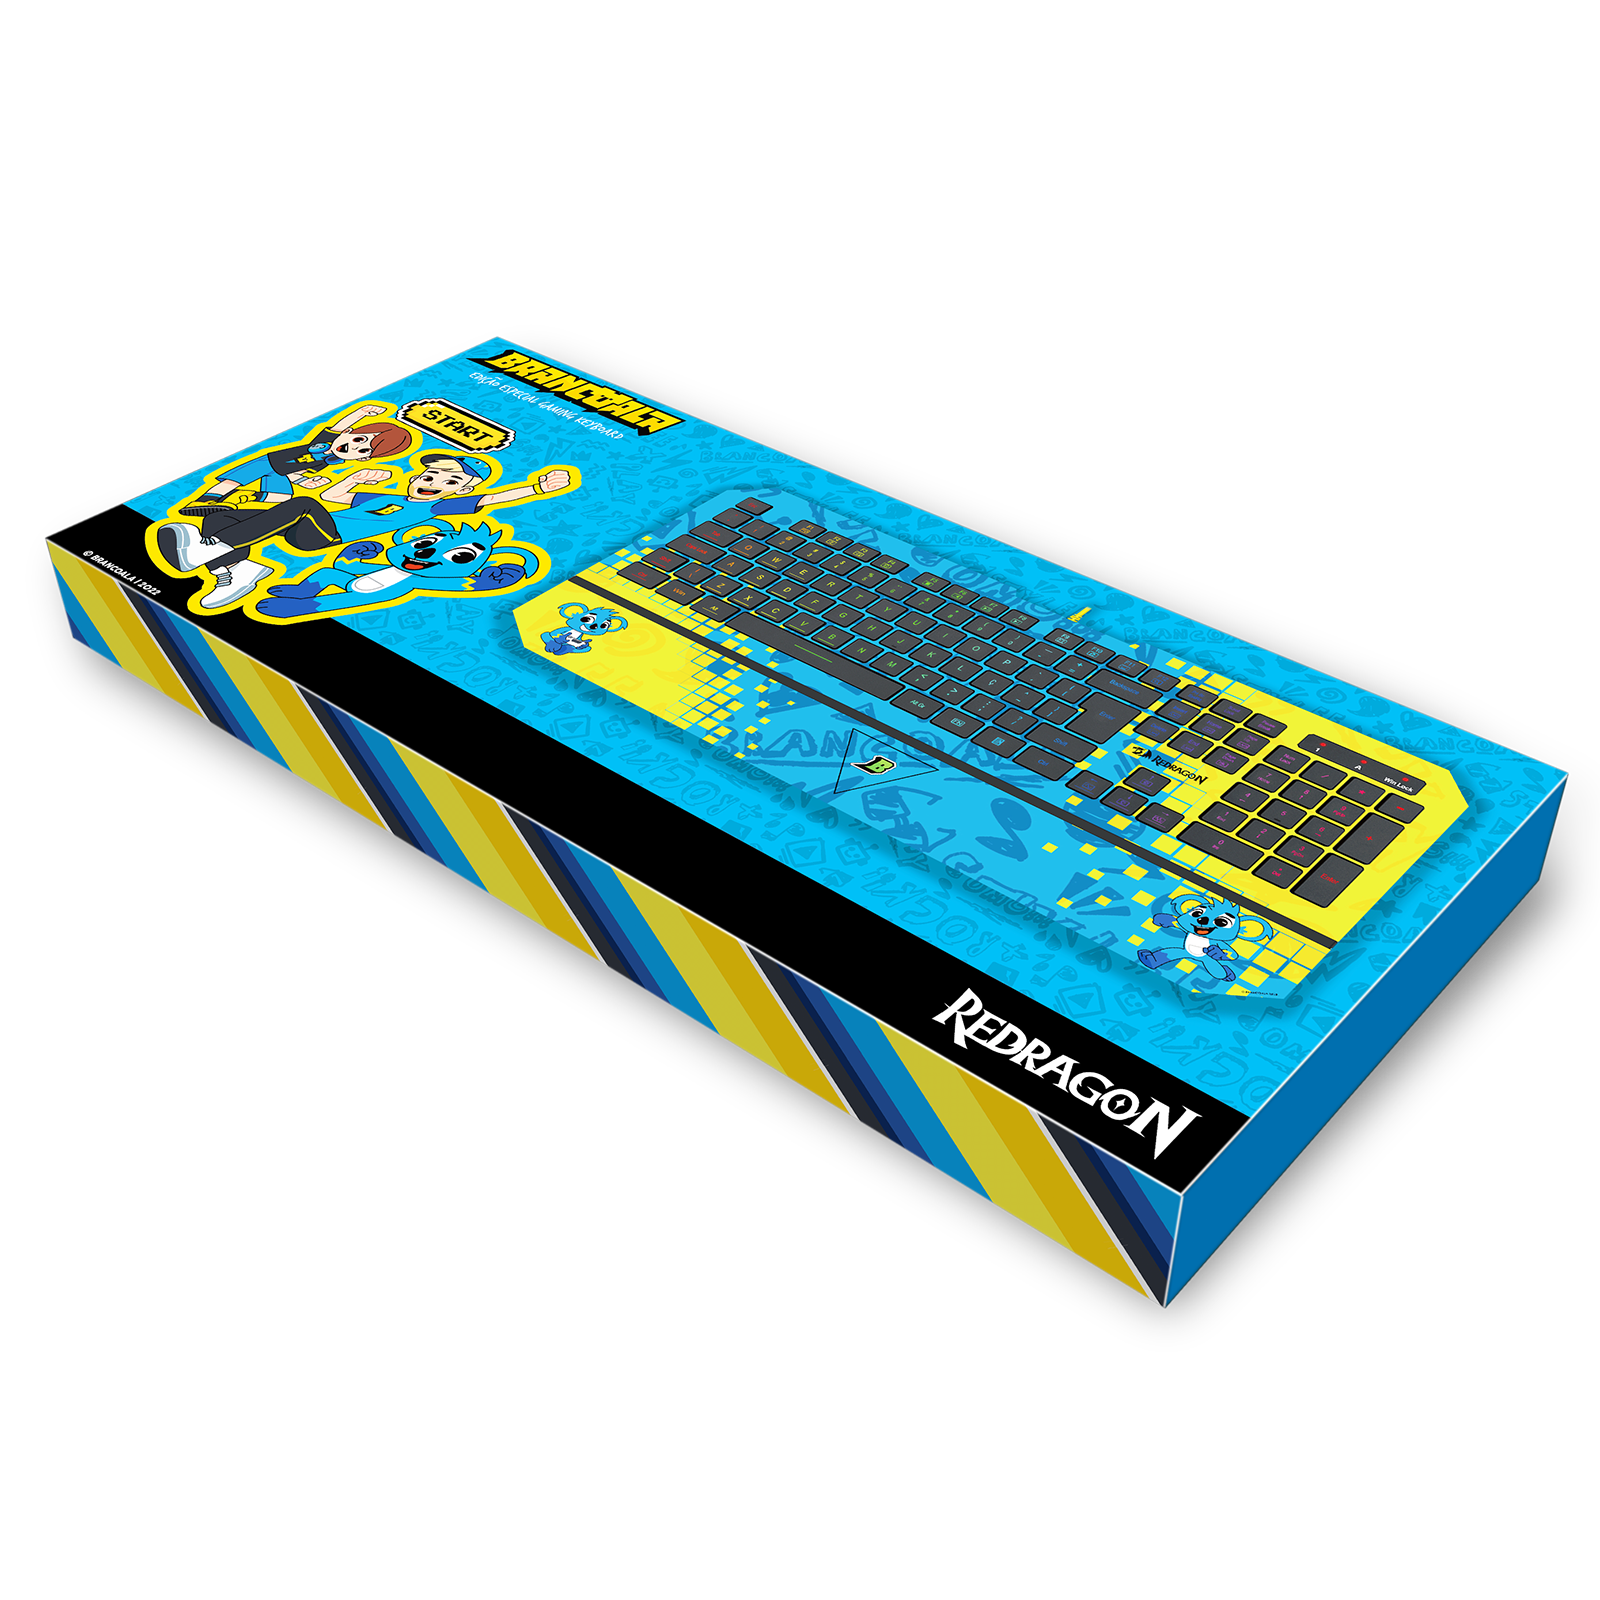 Kit Gamer Redragon - Teclado Karura Brancoala ABNT2 - B502RGB (PT) +  Mousepad Brancoala - B030 + Mouse Brancoala